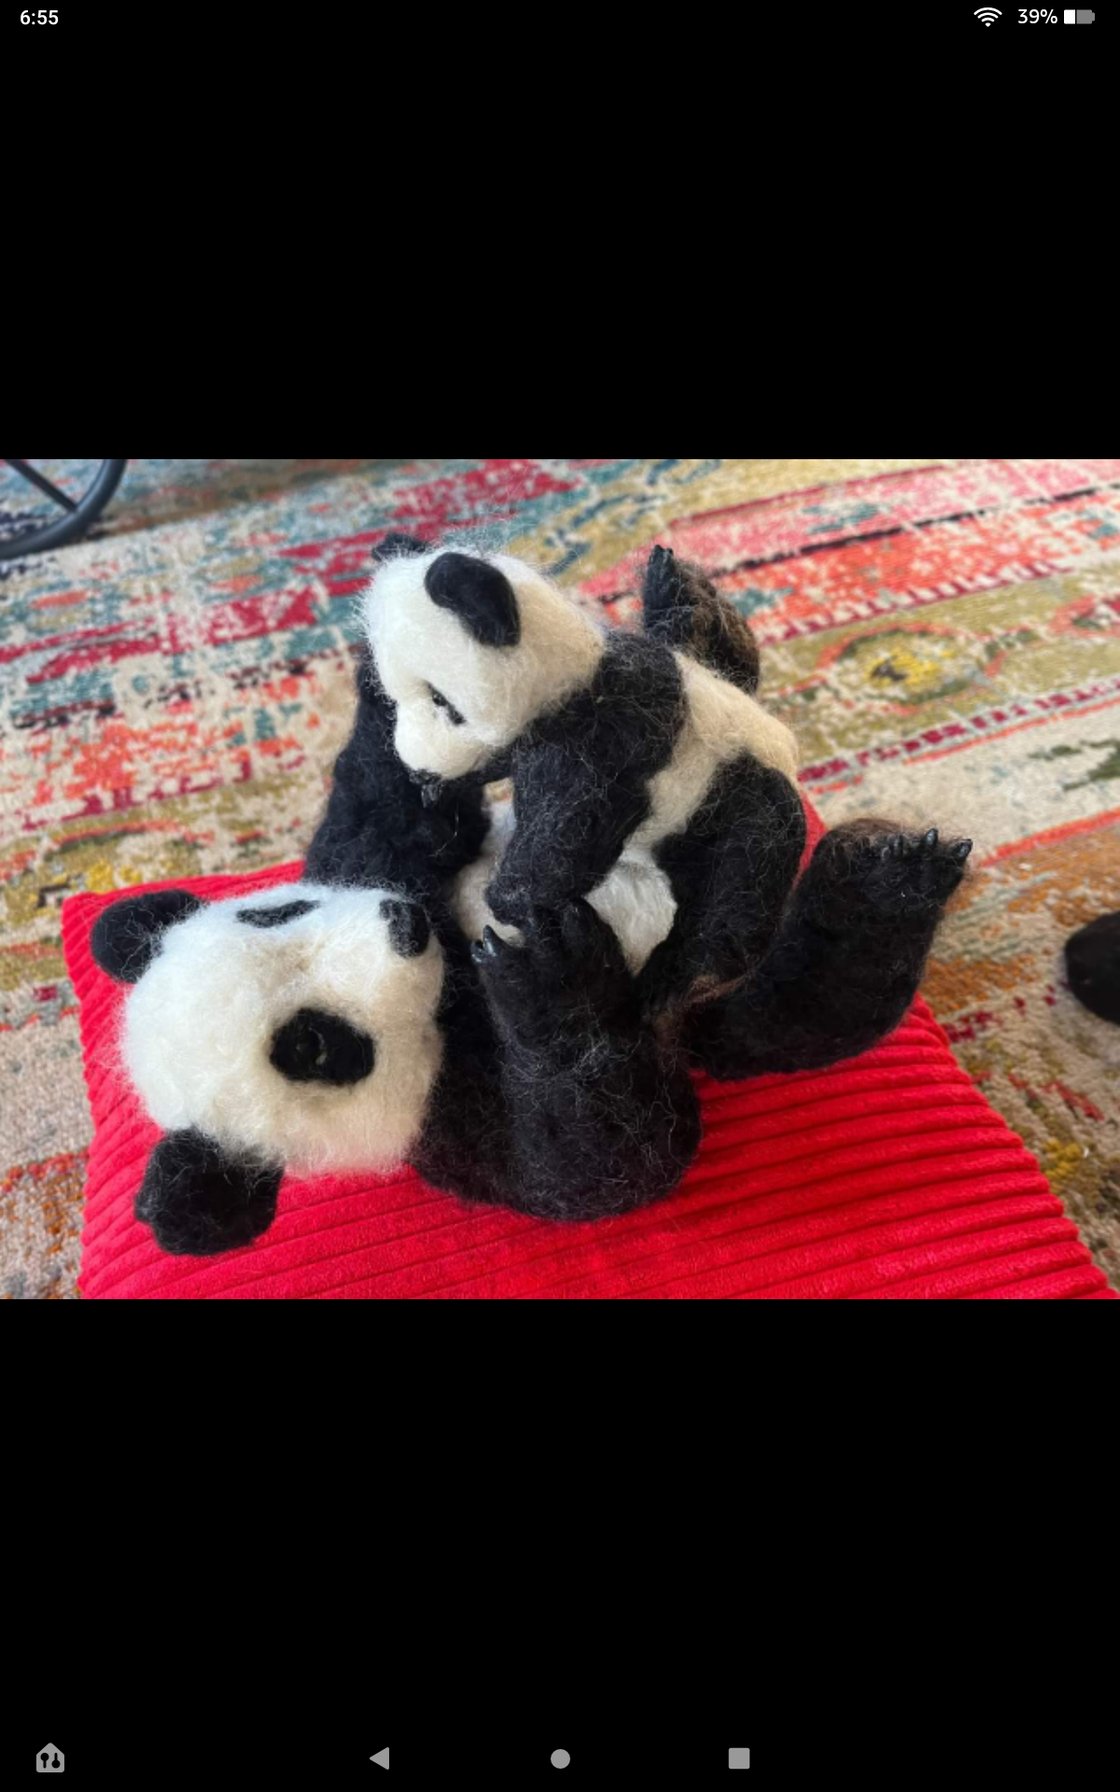 Image of Fiber Panda and cub